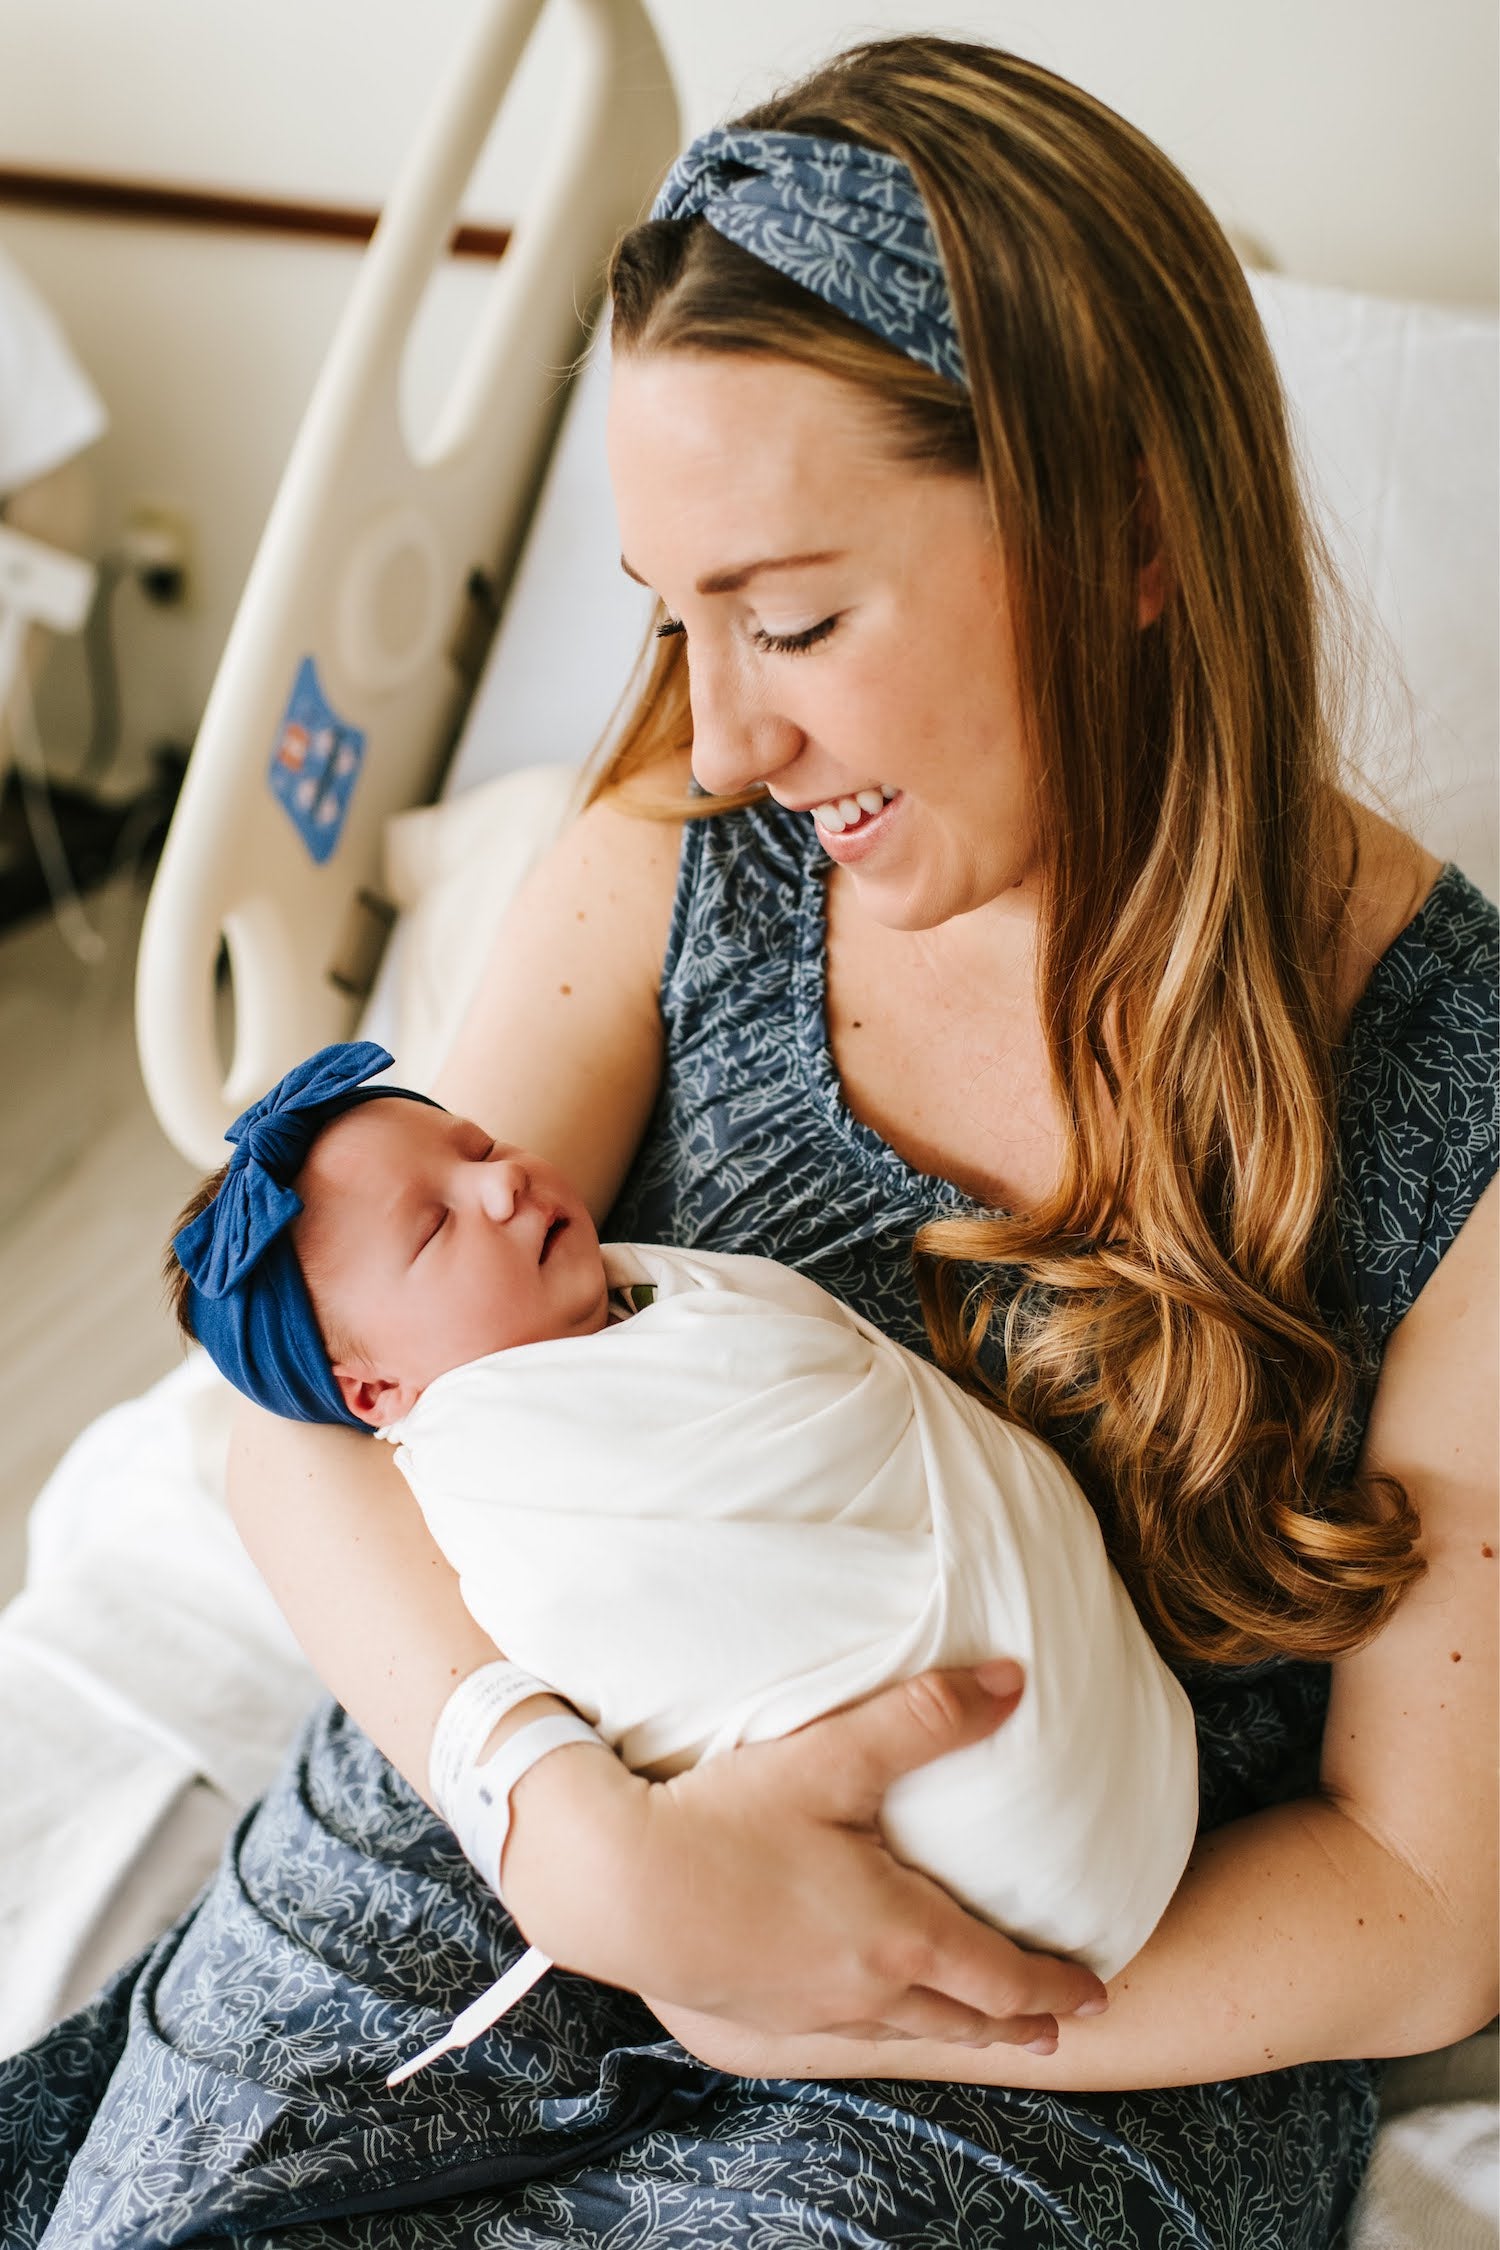 Nursing Tops, Dresses, Pajamas & More for Breastfeeding Moms